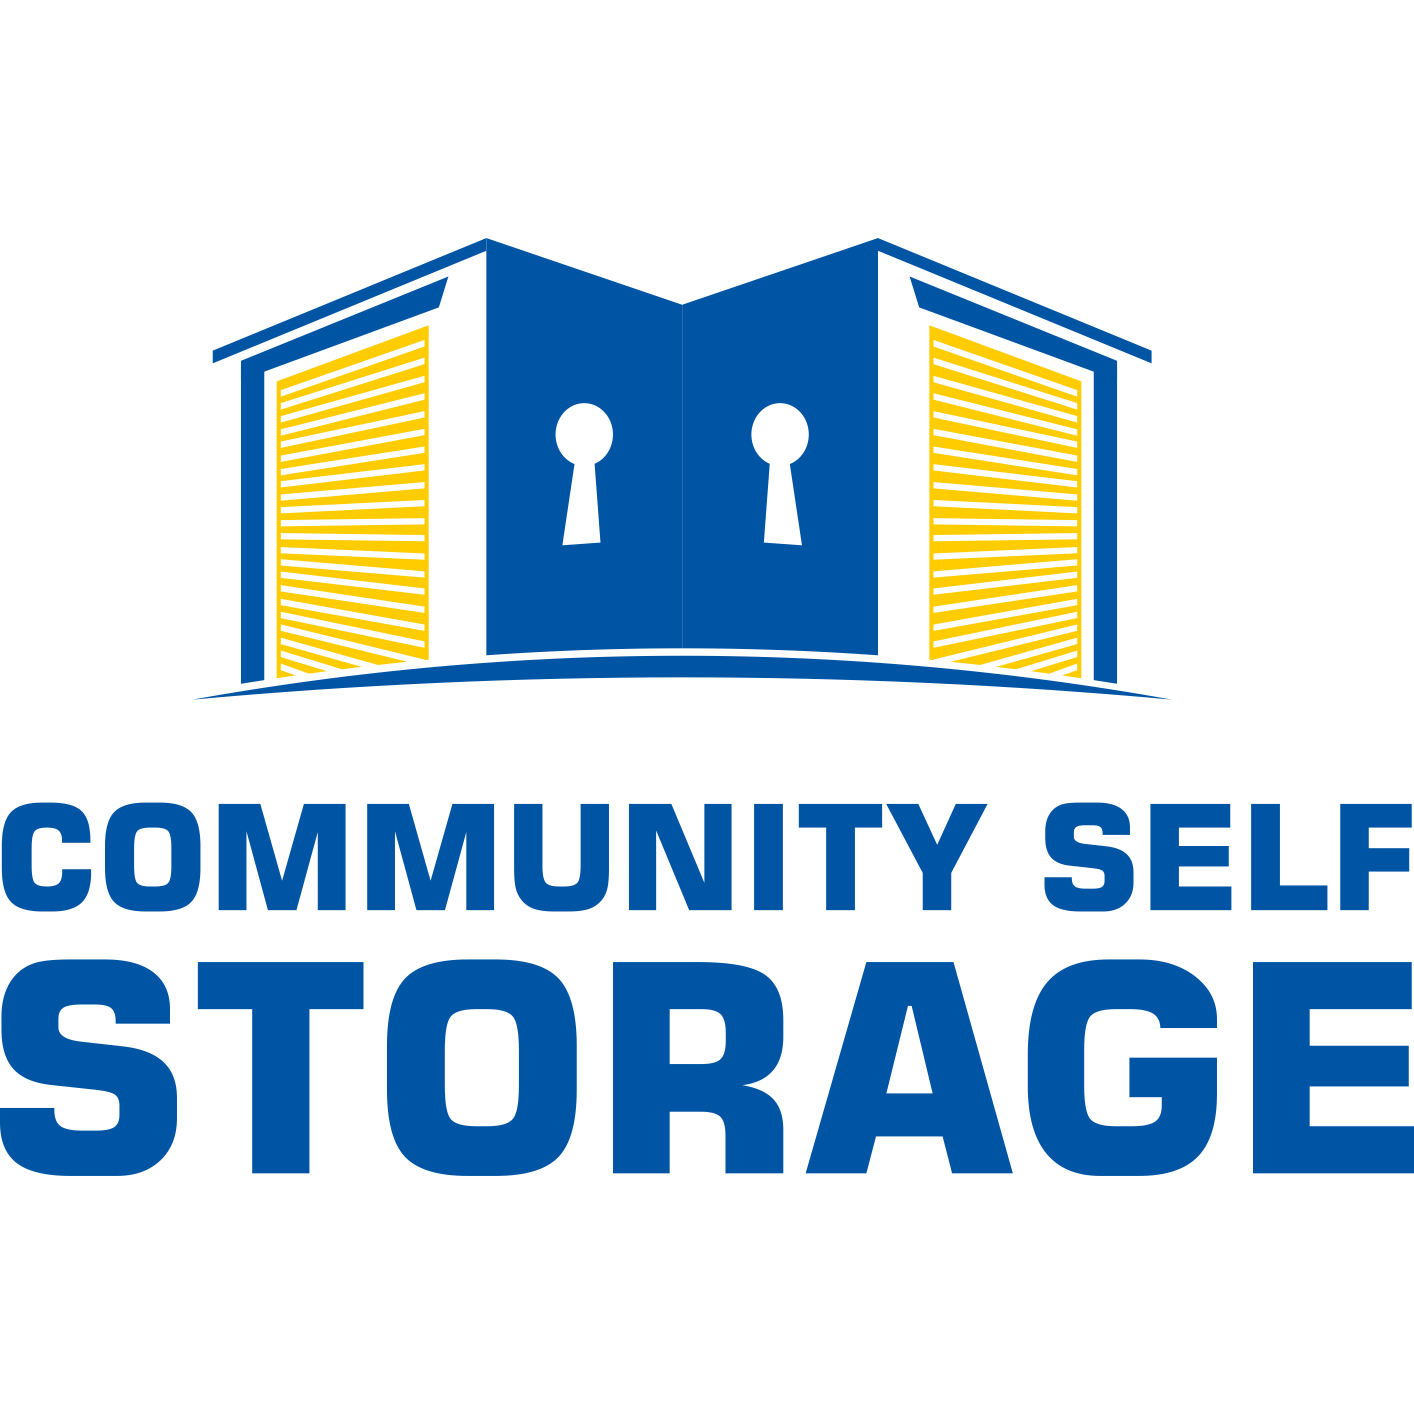 Community Self Storage - Gretna, NE 68028 - (402)933-4252 | ShowMeLocal.com